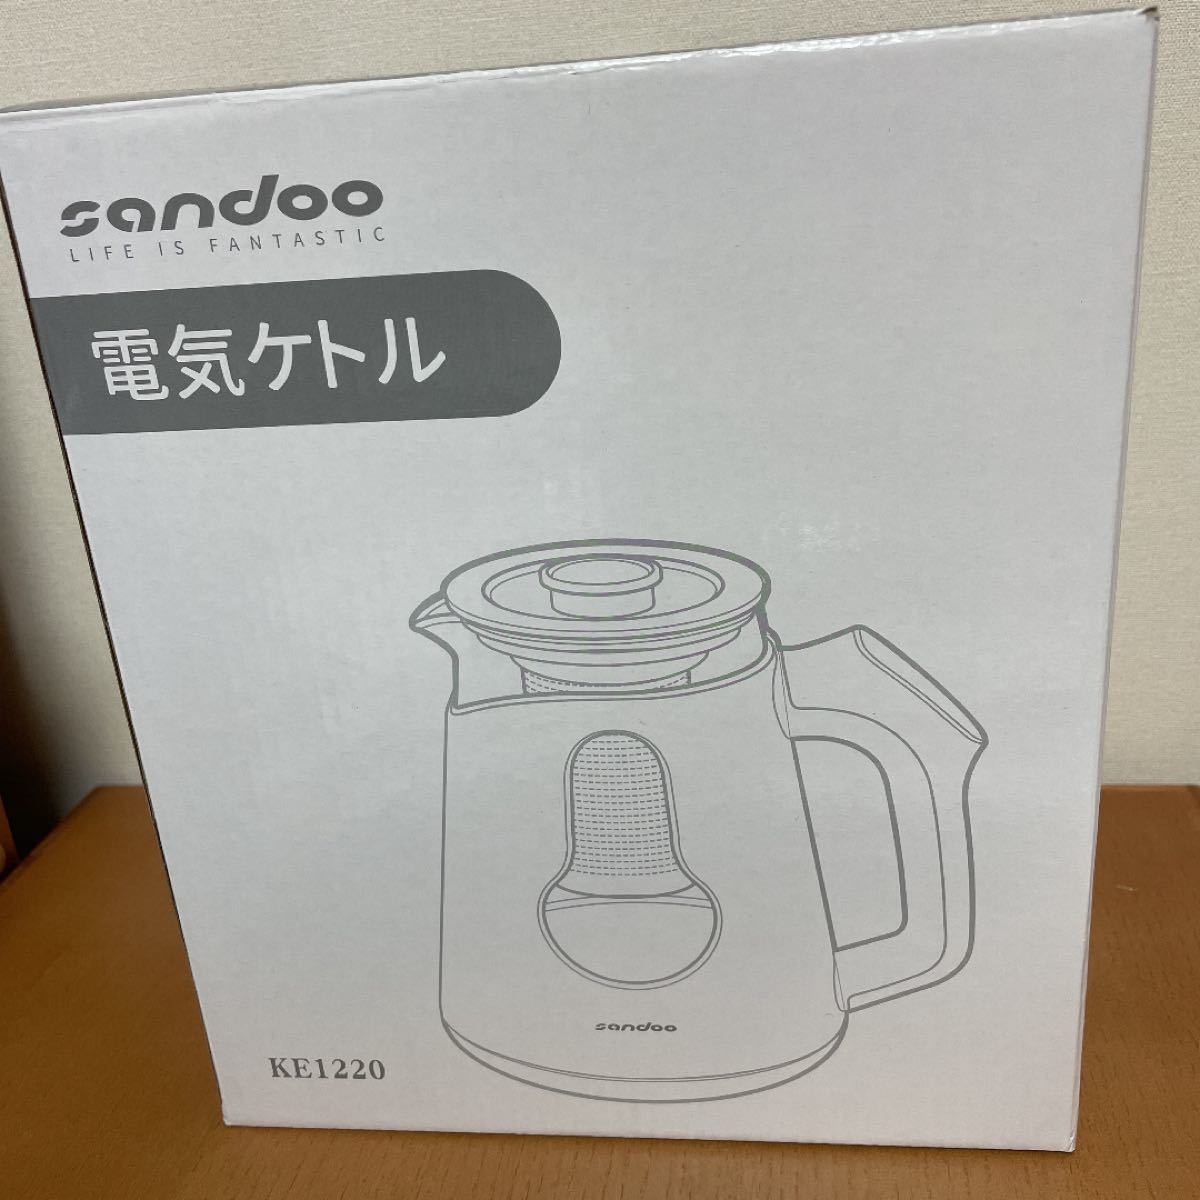 Sandoo 温度調節 電気ケトル 1℃刻み 湯沸かしケトル  保温機能付き